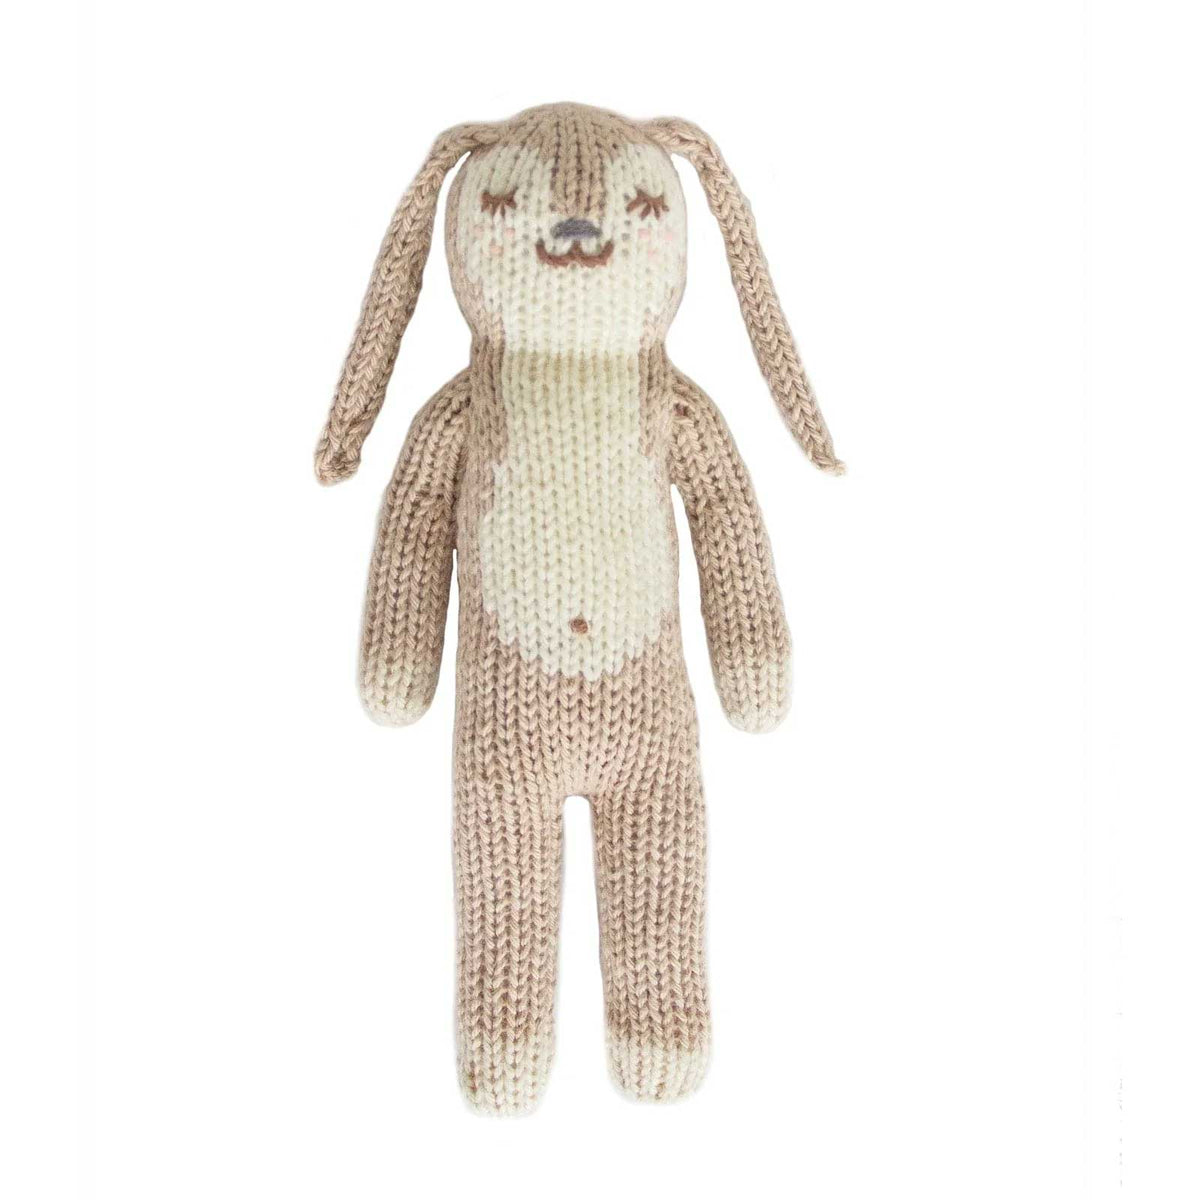 Blabla Knit Doll, Honey Bunny - Rattle